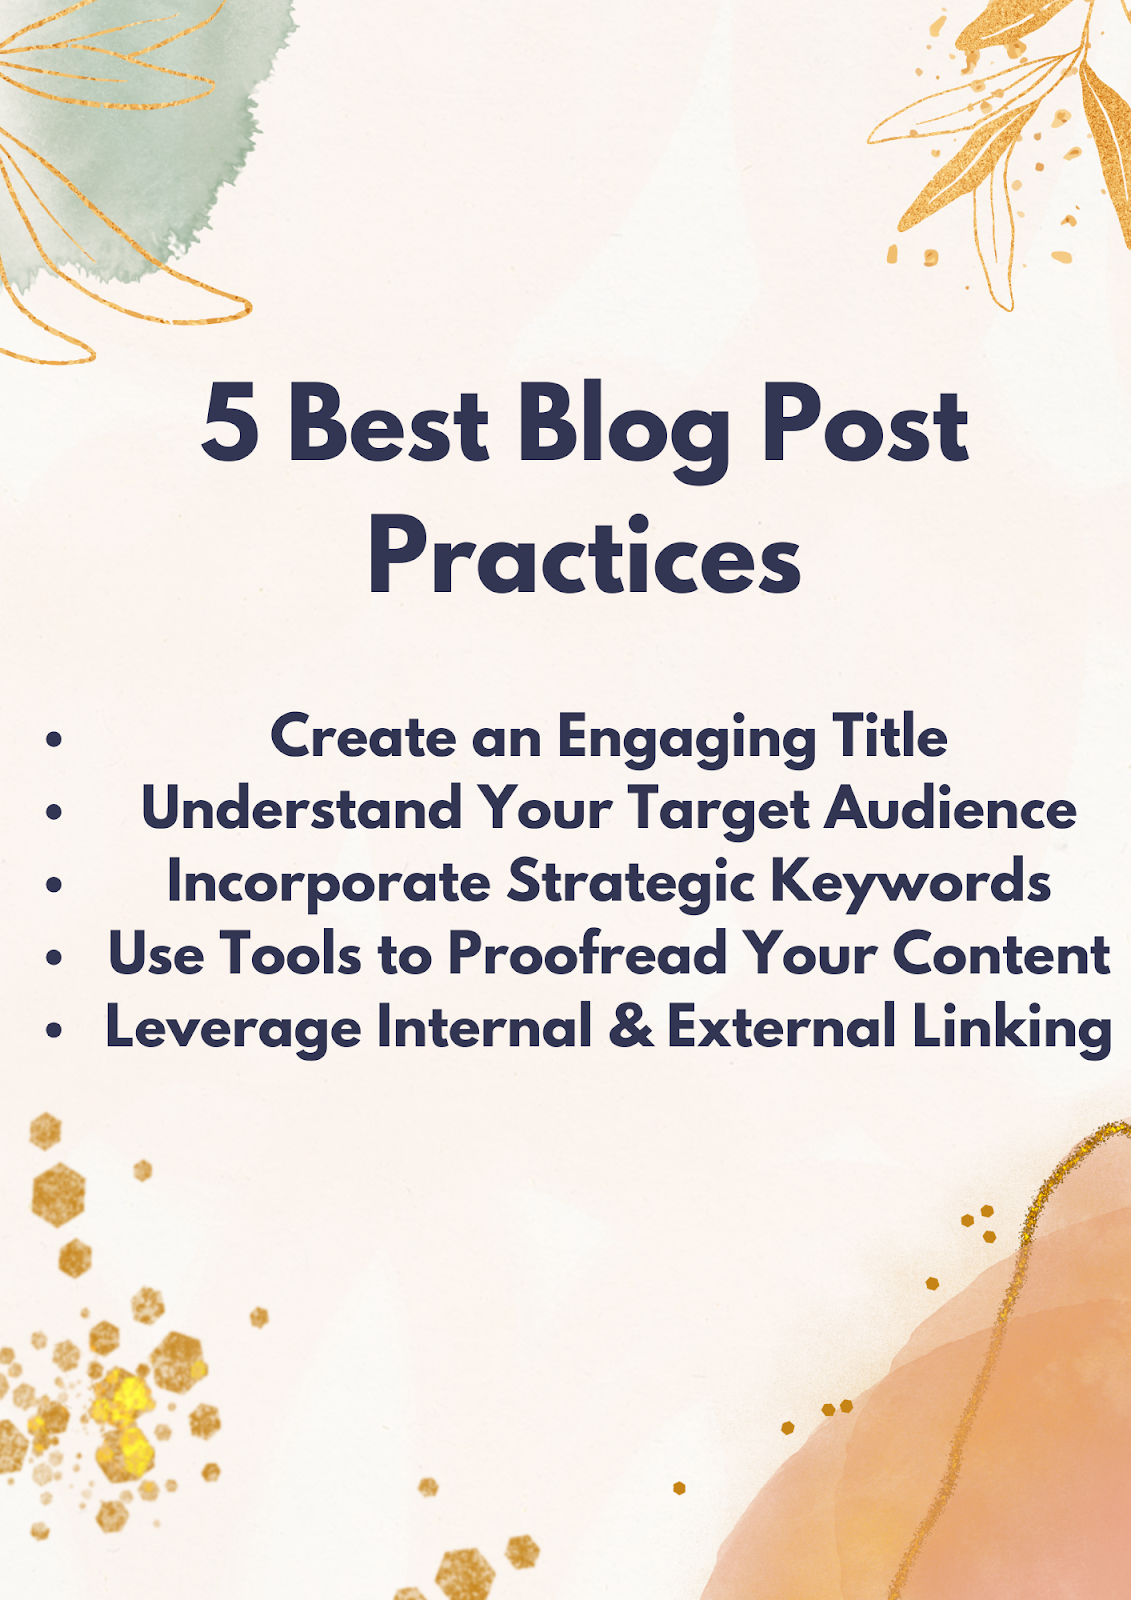 5 Best Blog Post Practices